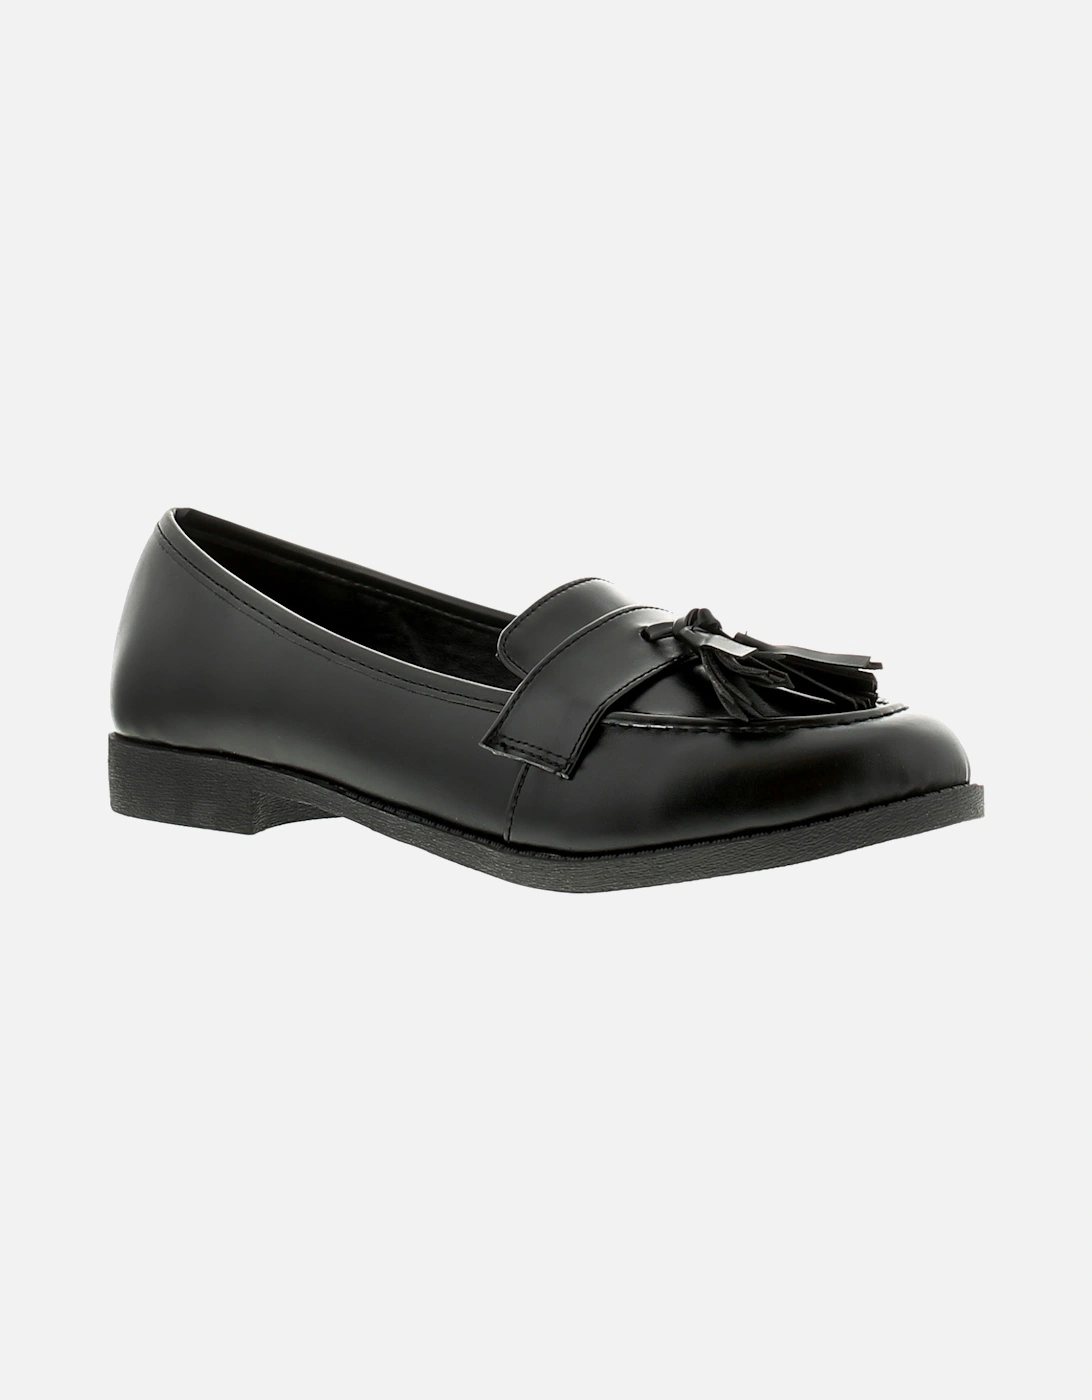 Womens Shoes teasle Slip On black UK Size, 6 of 5